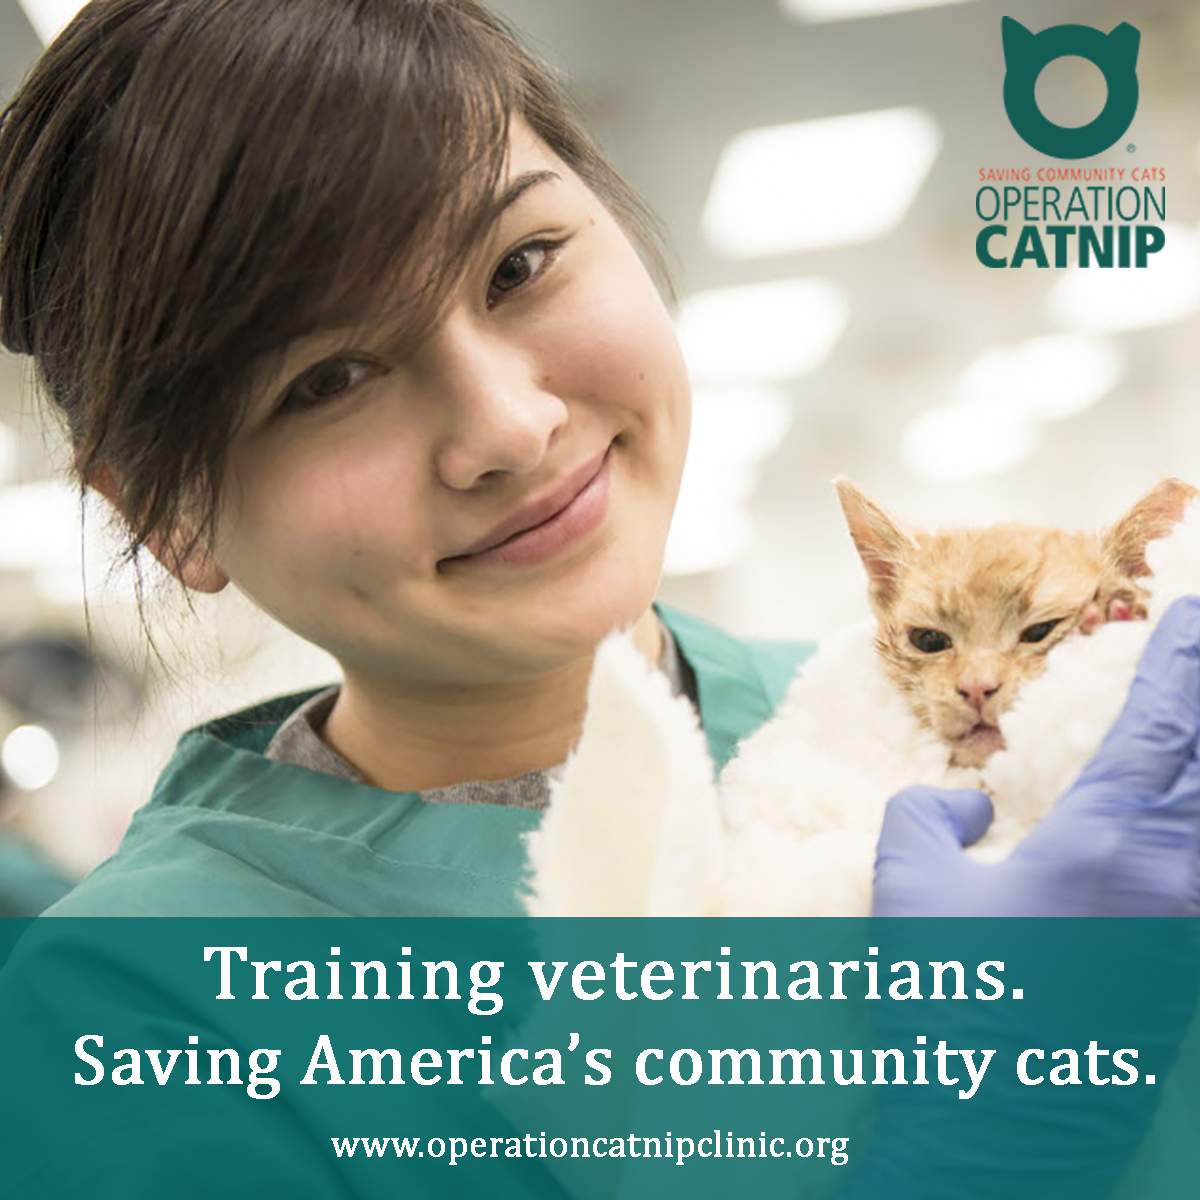 Training veterinarians to save America's community cats, courtesy Operation Catnip.